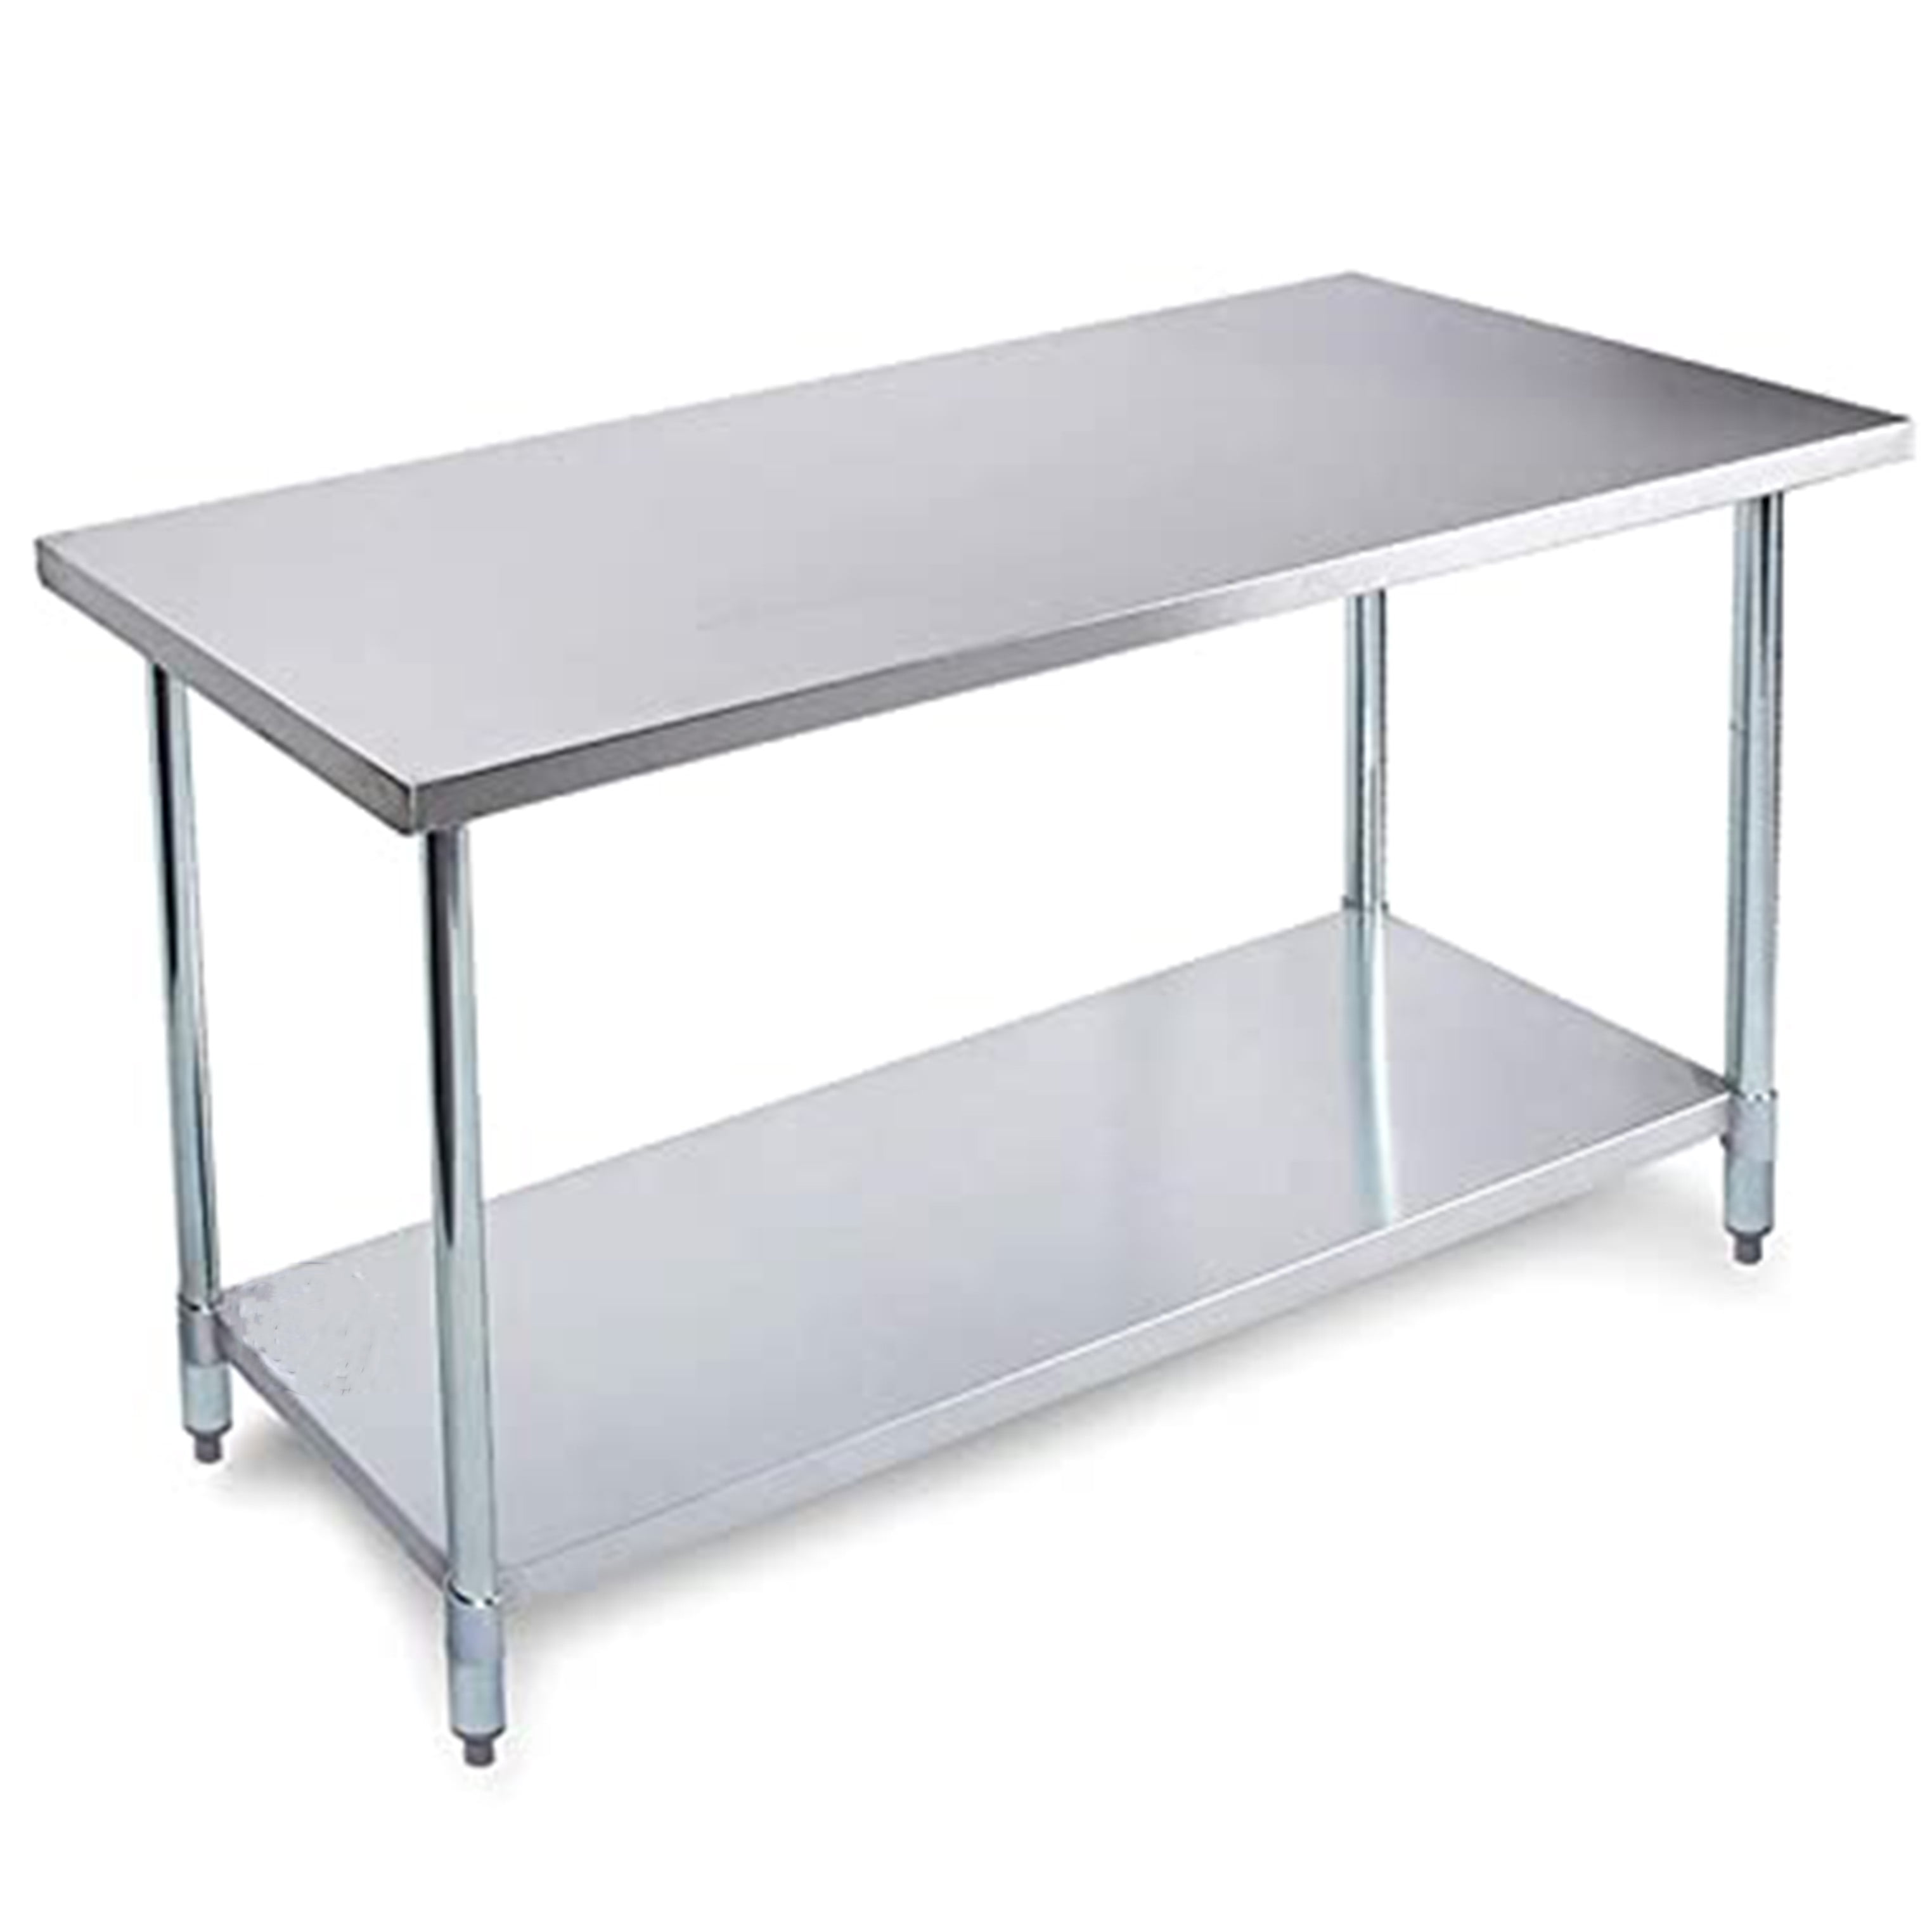 24" x 60"Adjustable Table Work Prep Undershelf Restaurant Indoor Stainless Steel Work Tables With Undershelf